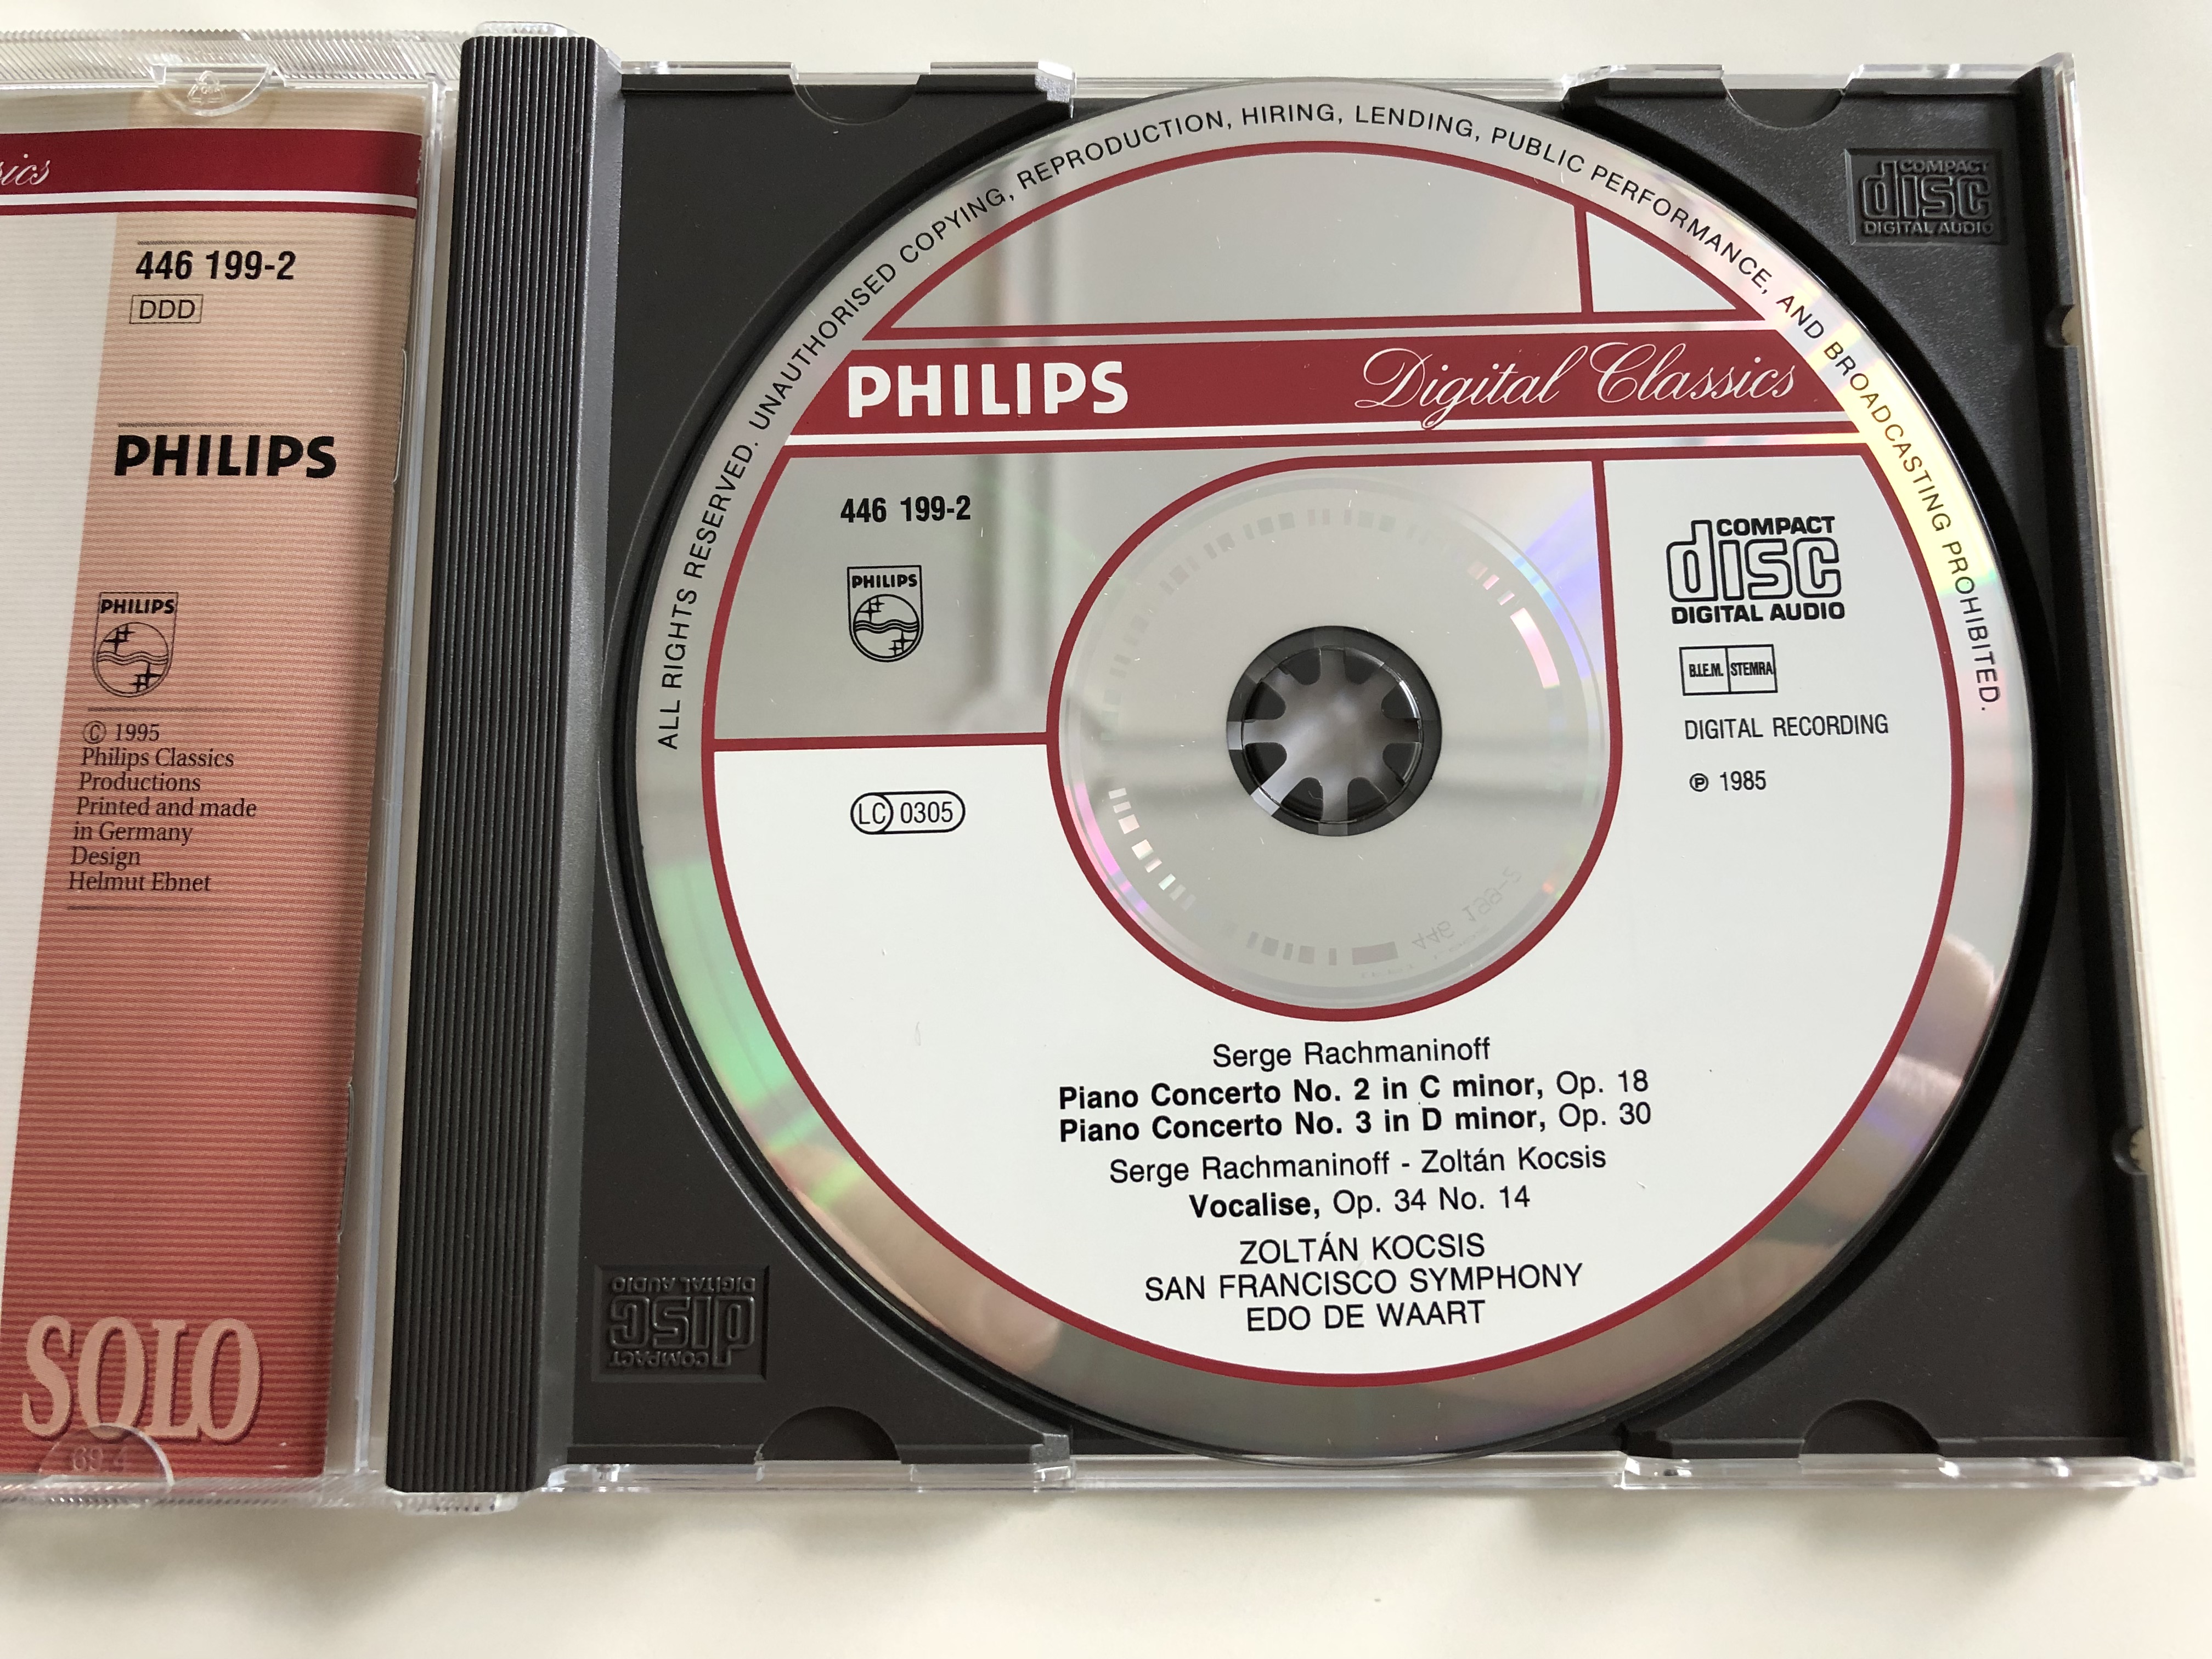 rachmaninoff-piano-concertos-nos.-2-3-vocalise-zolt-n-kocsis-san-francisco-symphony-edo-de-waart-philips-digital-classics-audio-cd-1995-446-199-2-5-.jpg